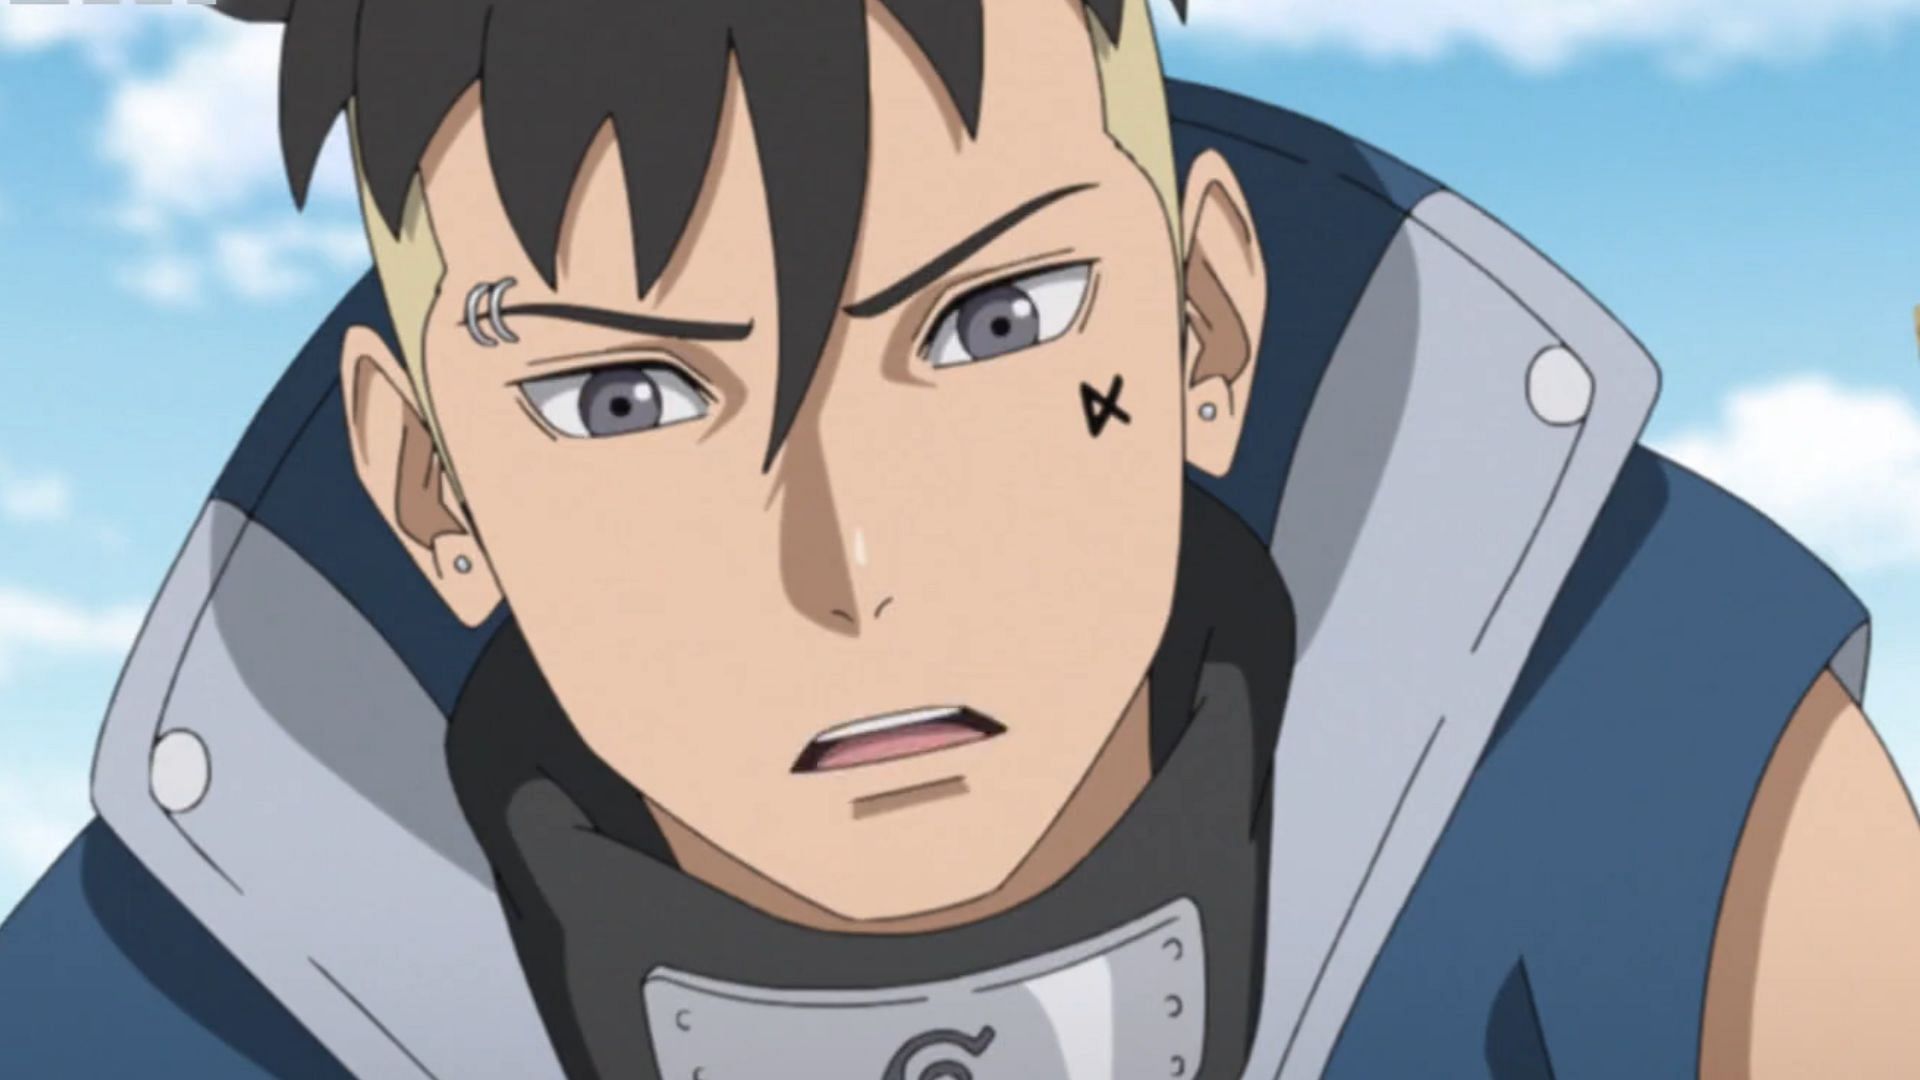 VIZ Media - Boruto: Naruto Next Generations, Episode 286 - Sasuke's Story:  The Ring” is live on Hulu! 🦖